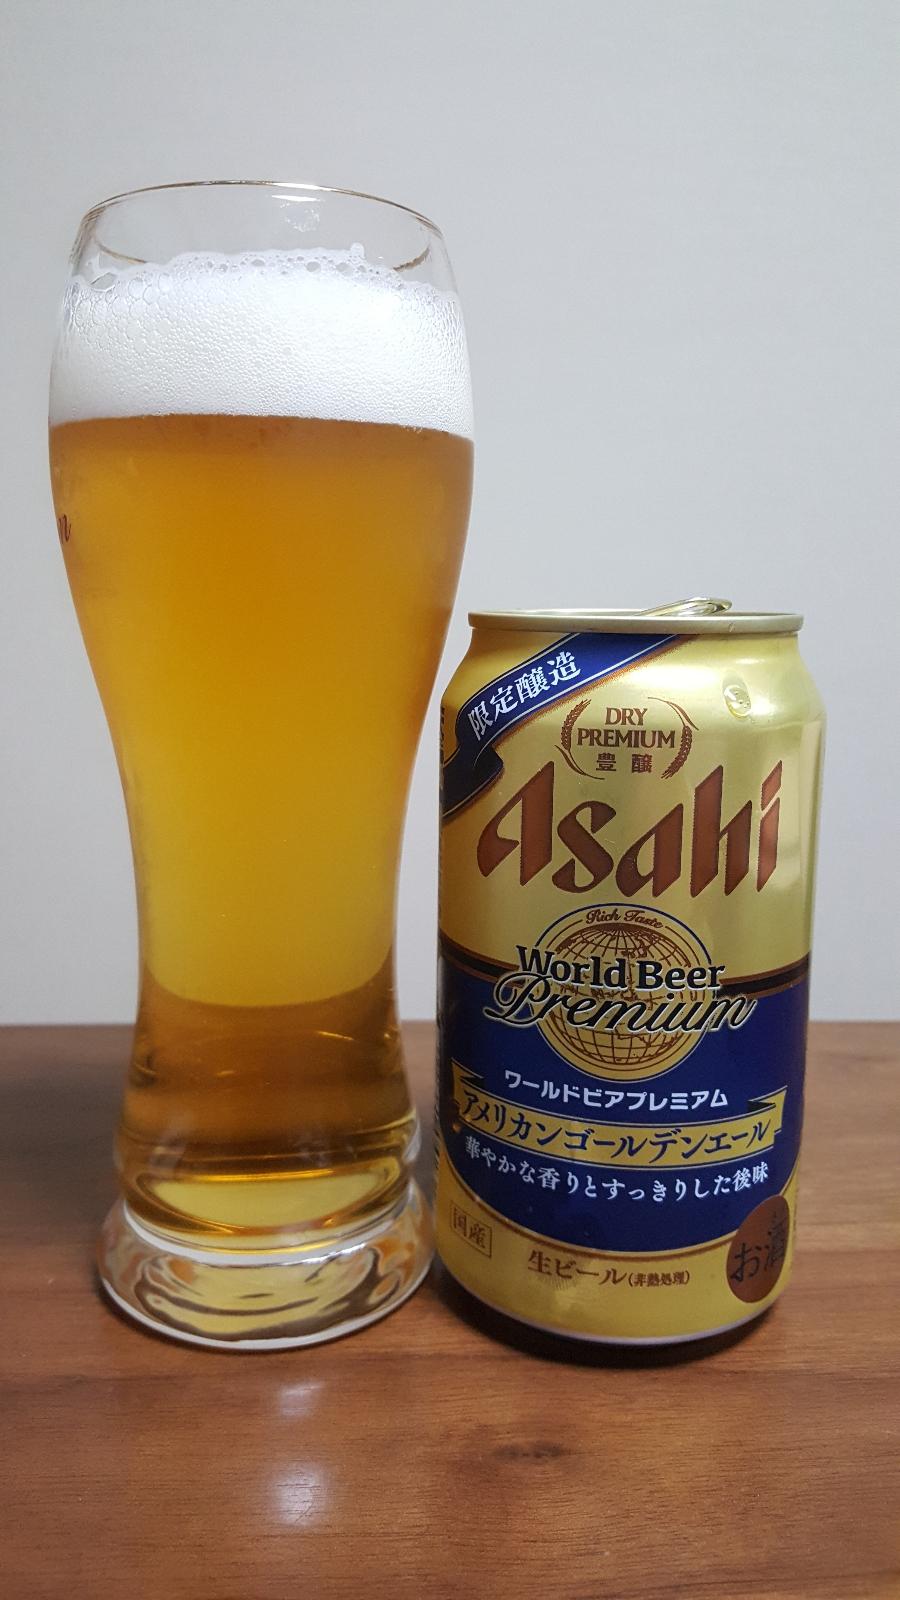 Asahi World Beer Premium: American Golden Ale